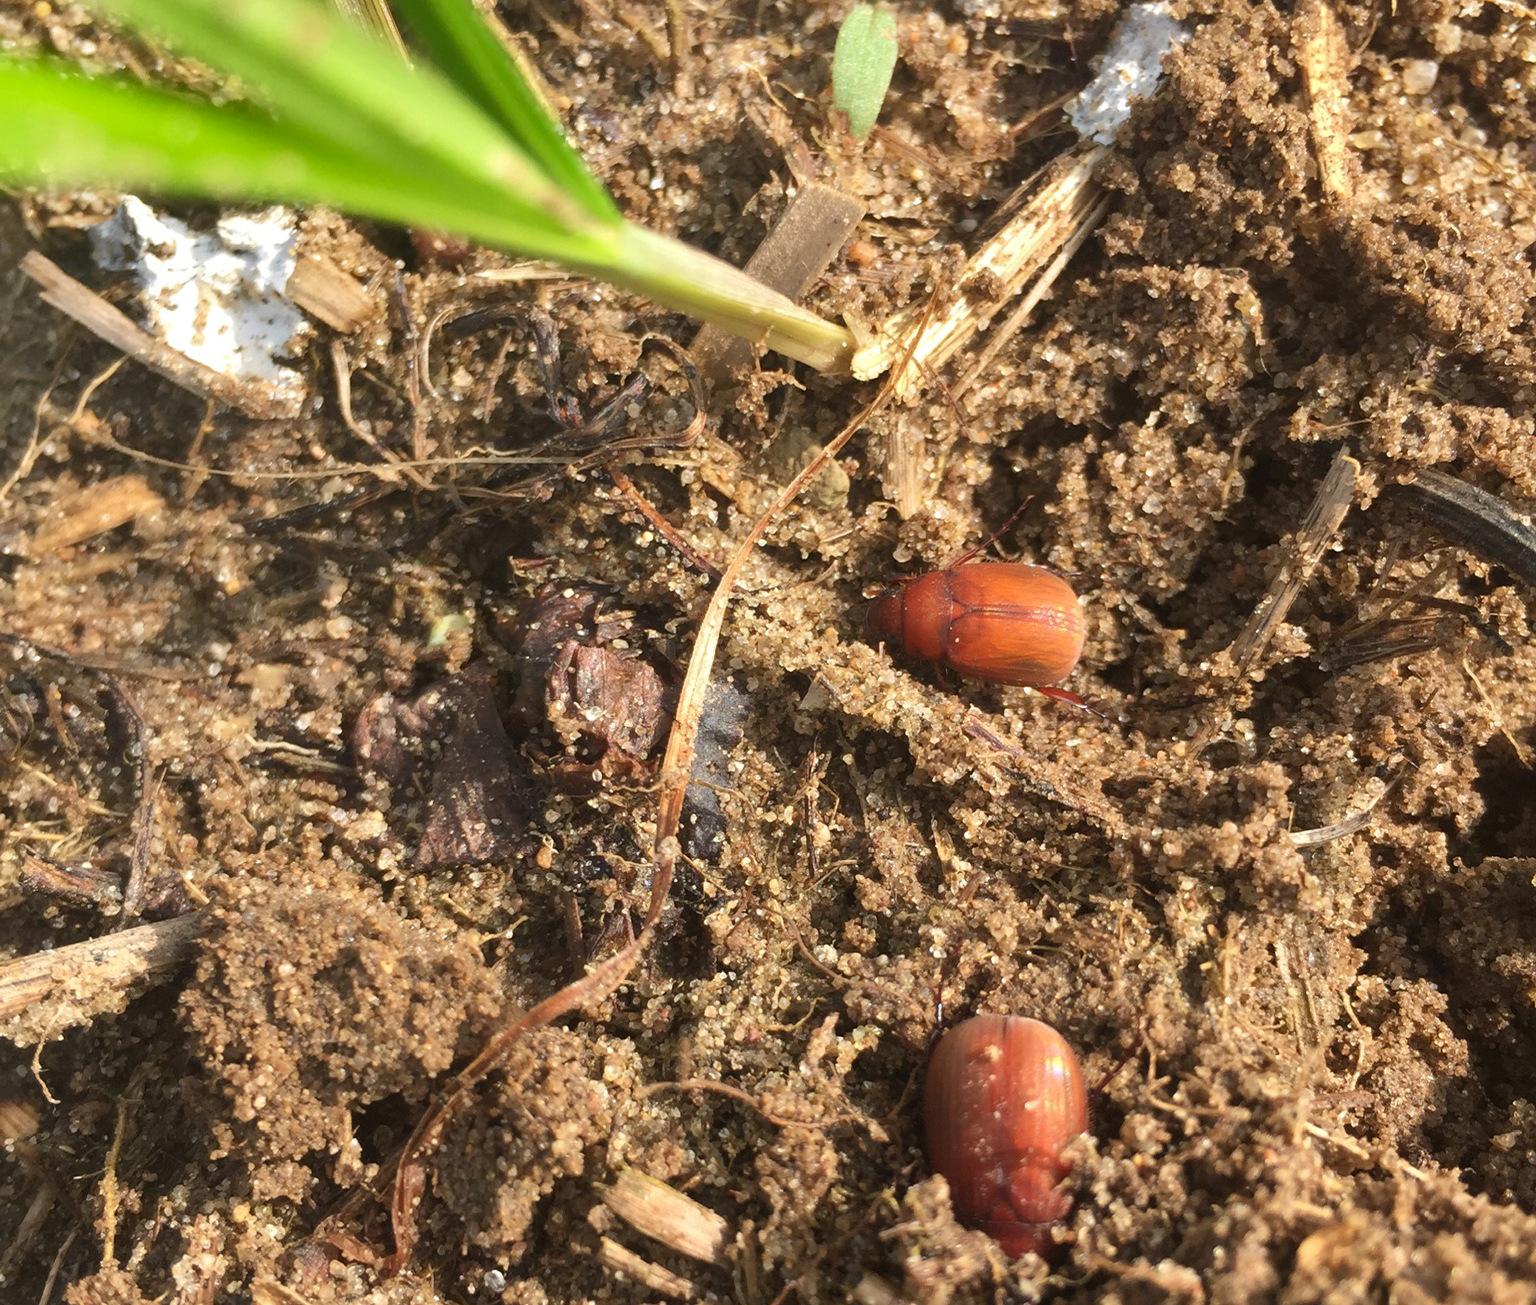 Asiatic garden beetles on soil